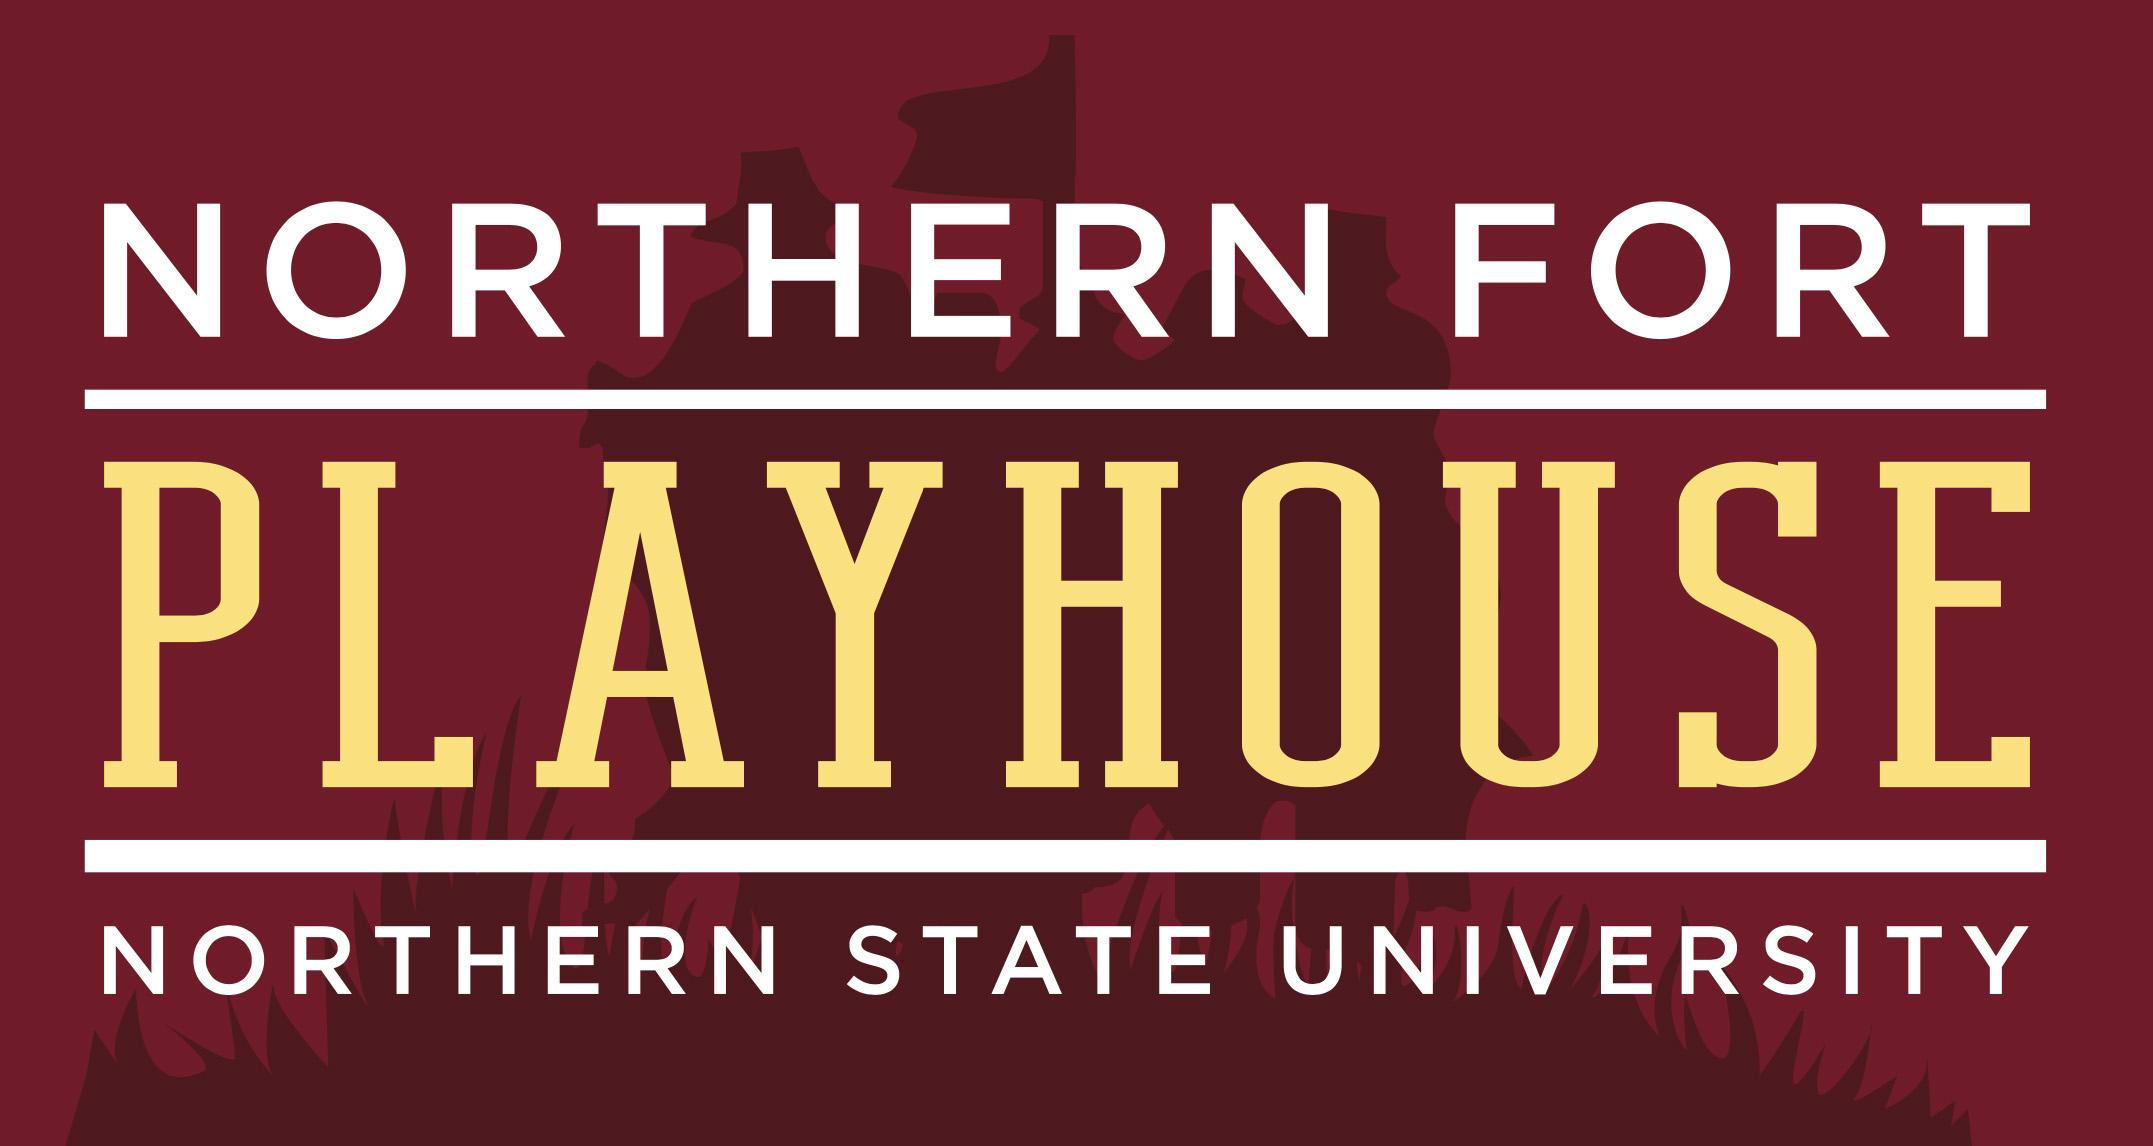 Northern Fort Playhouse logo 2022